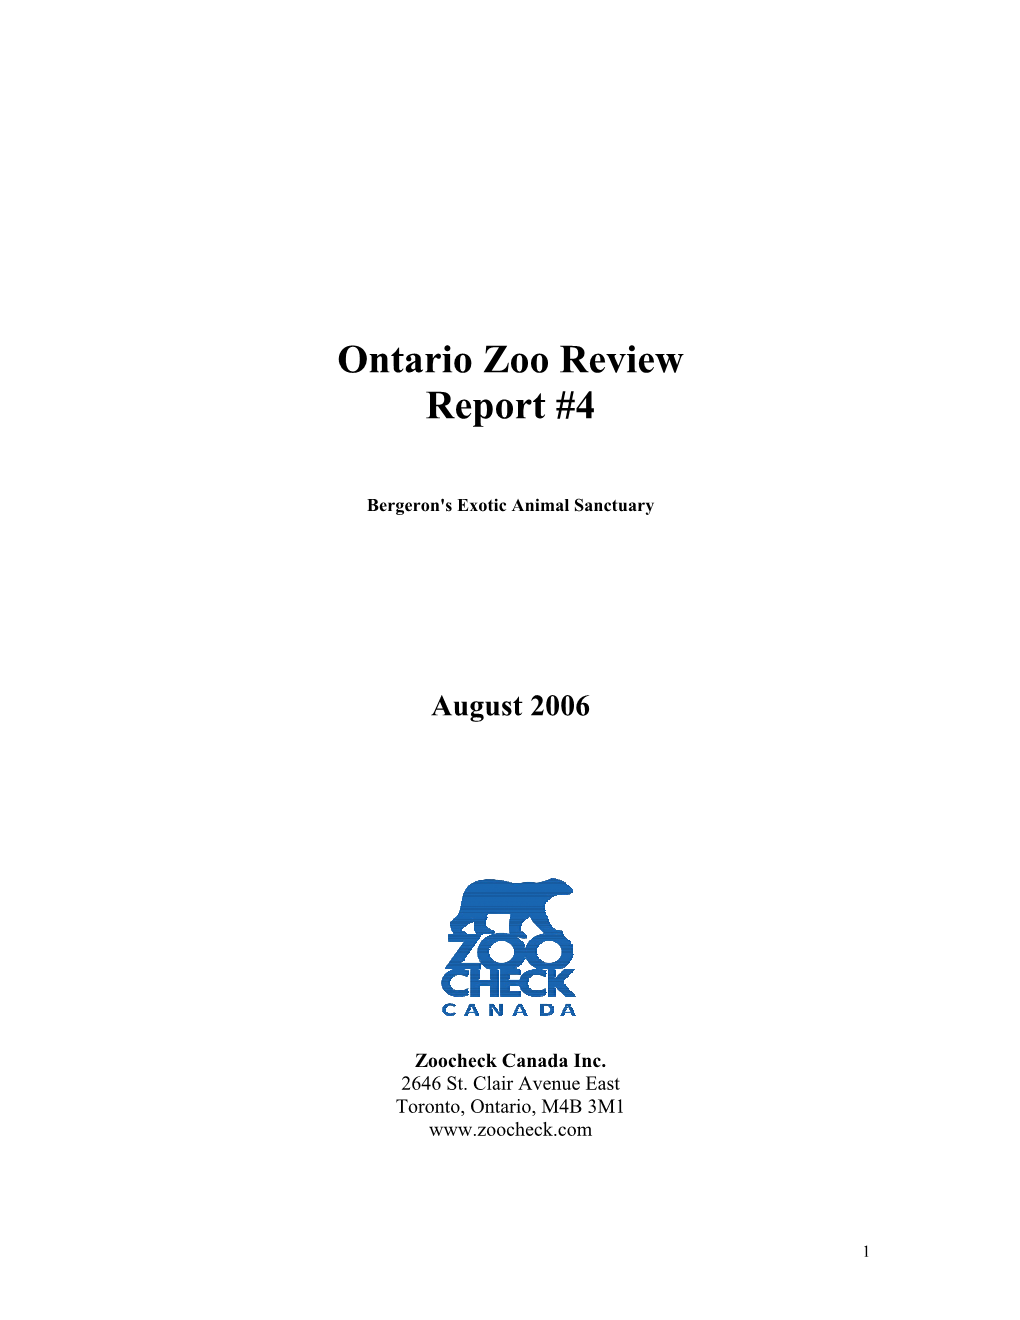 Ontario Zoo Review Report #4, Bergeron's Exotic Animal Sanctuary